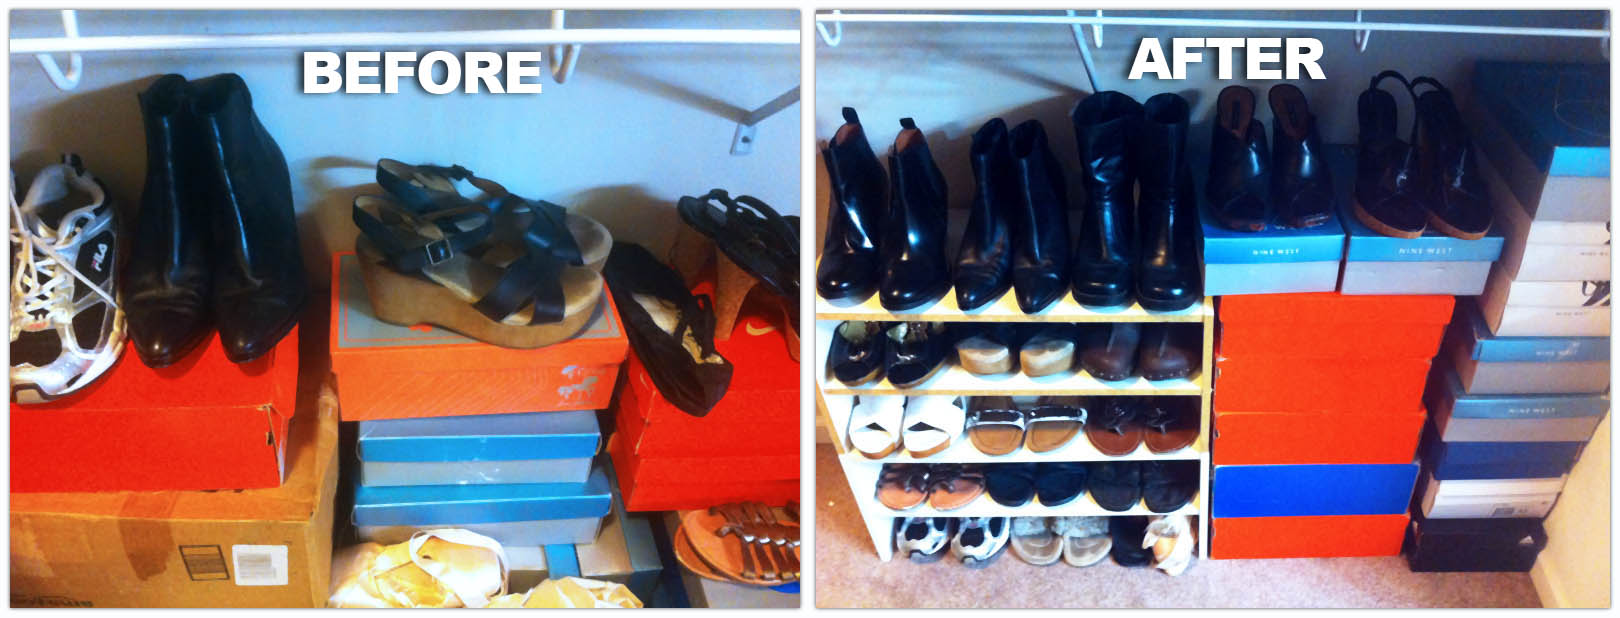 monica's closet shoes organized